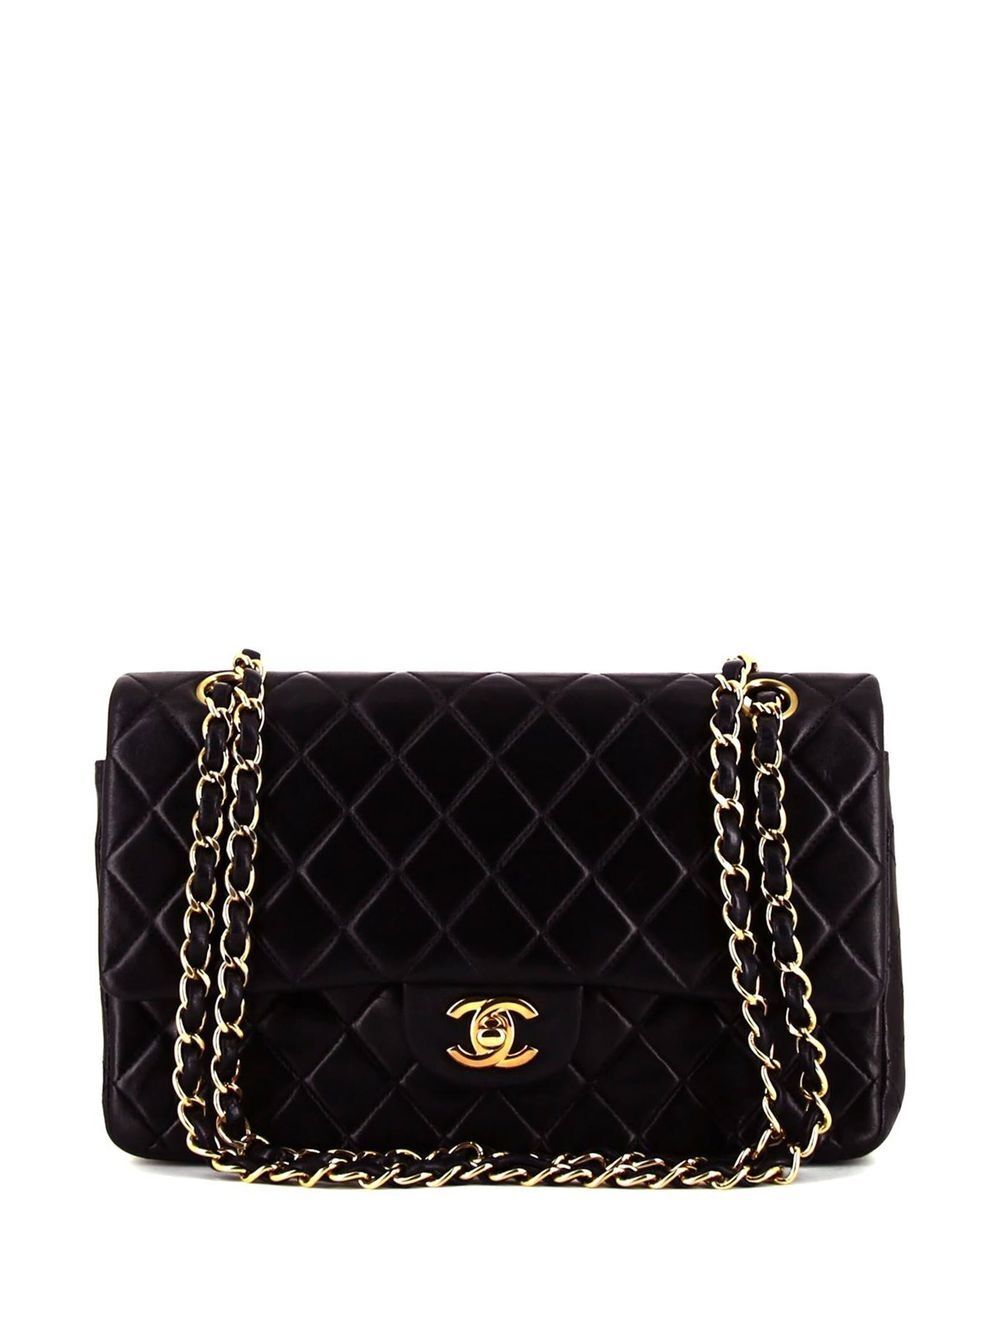 Chanel Pre-Owned Timeless Classic Flap shoulder bag - Black